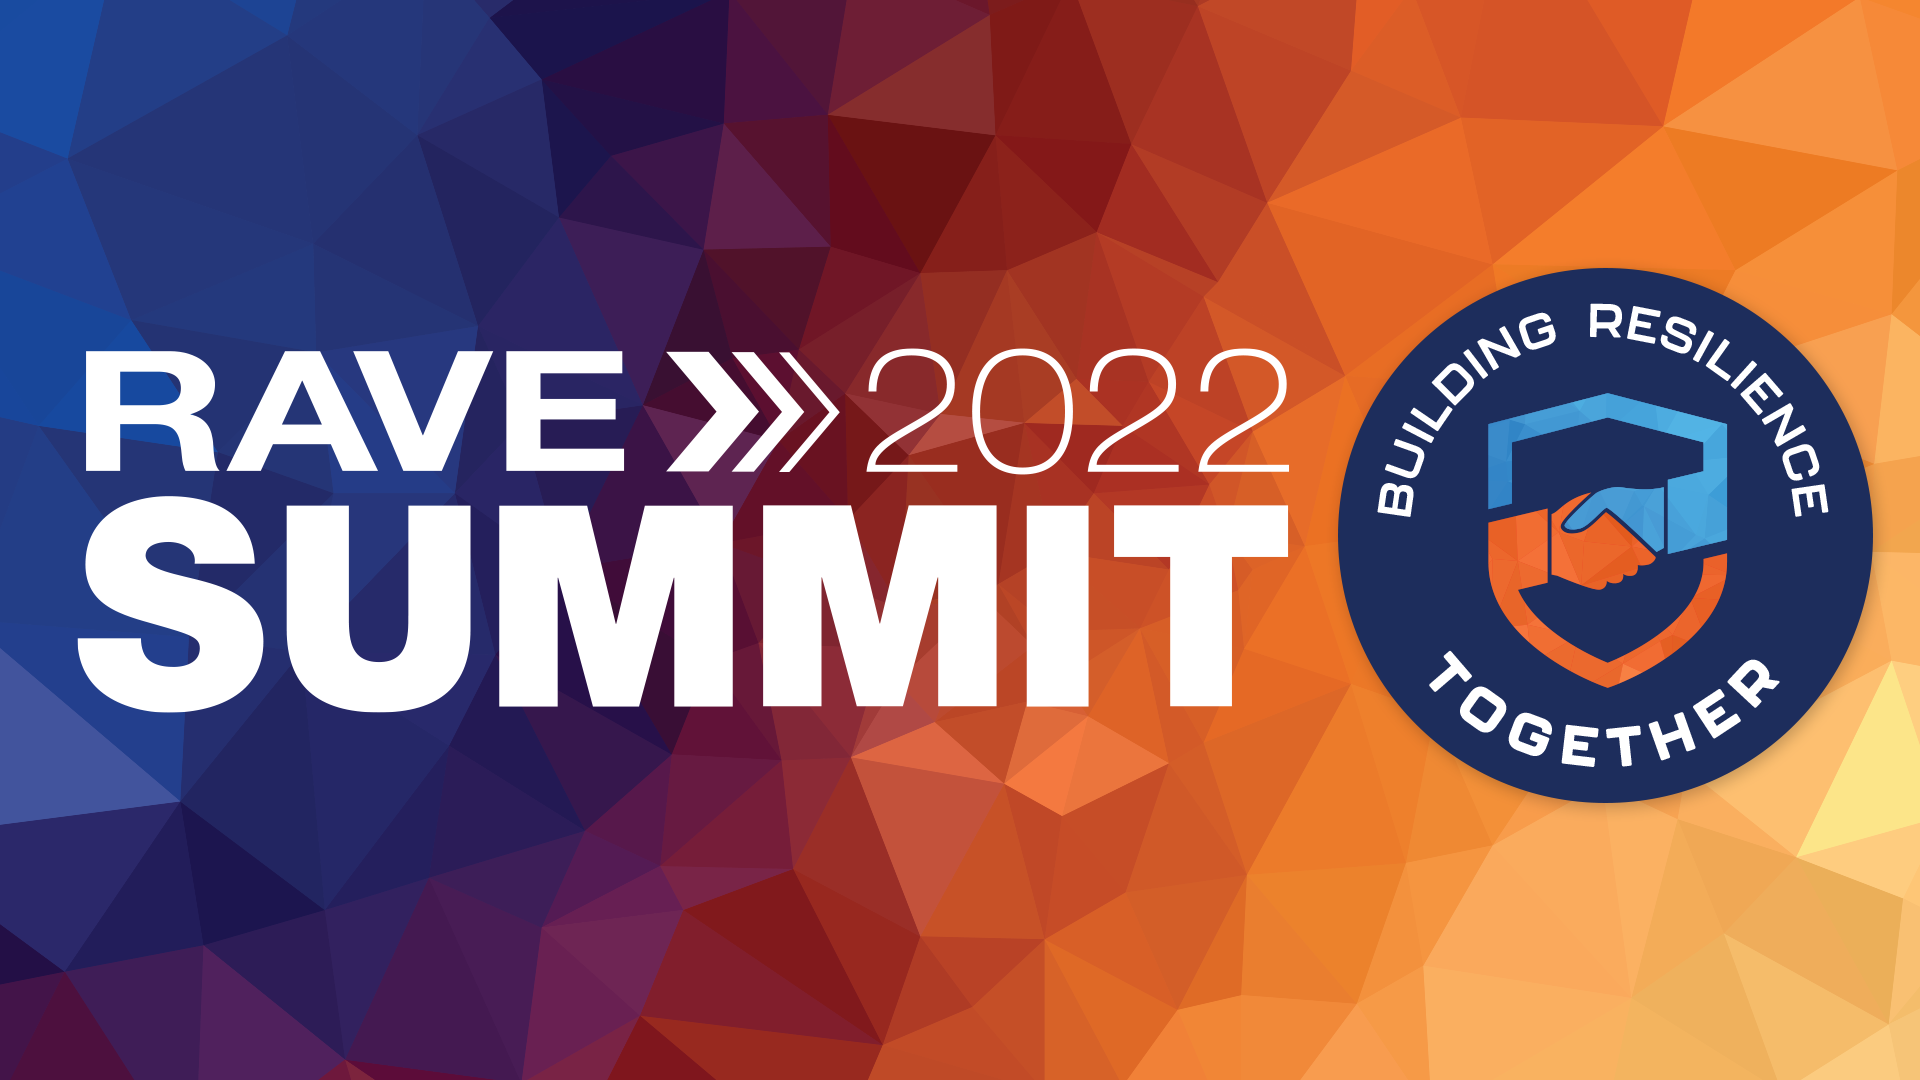 rave summit 2022 logo